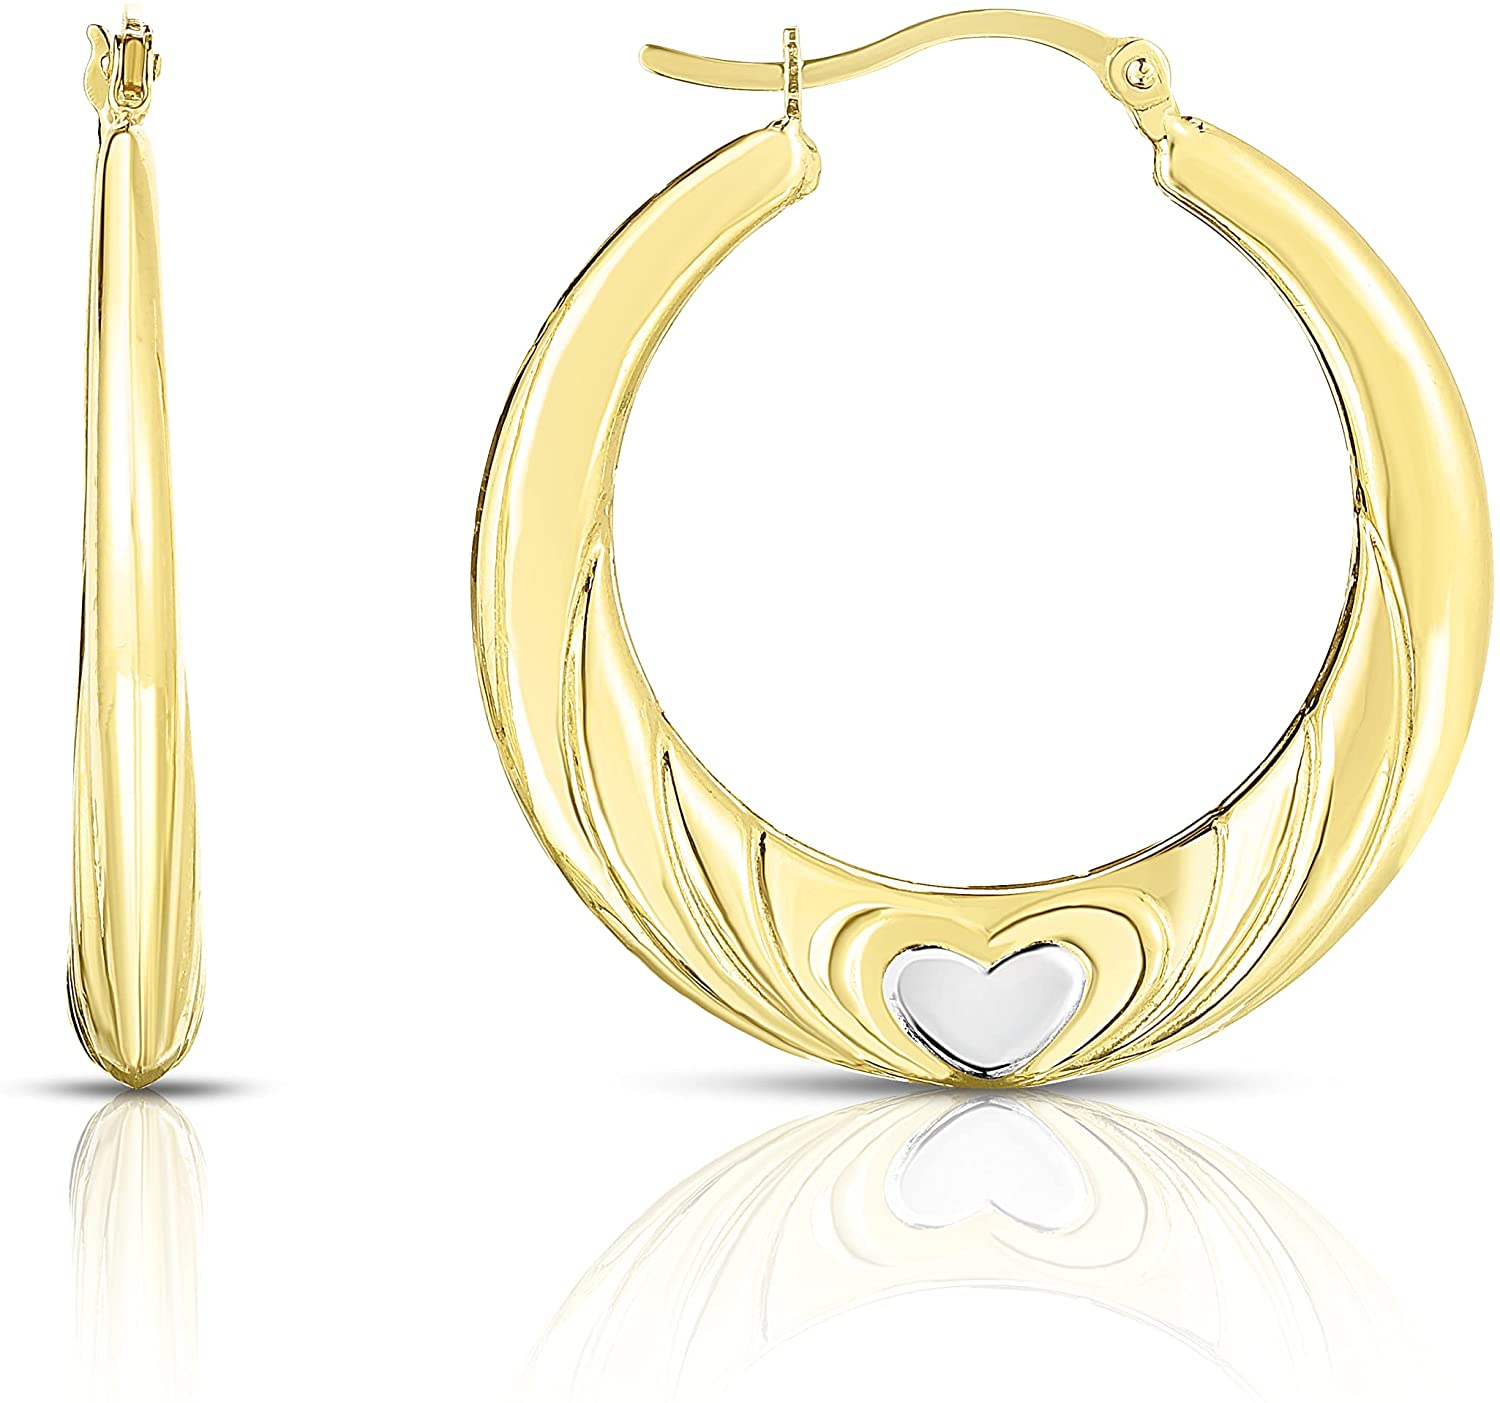 10k Two-Tone Gold Heart Shape and Vibration Design Hoop Earrings